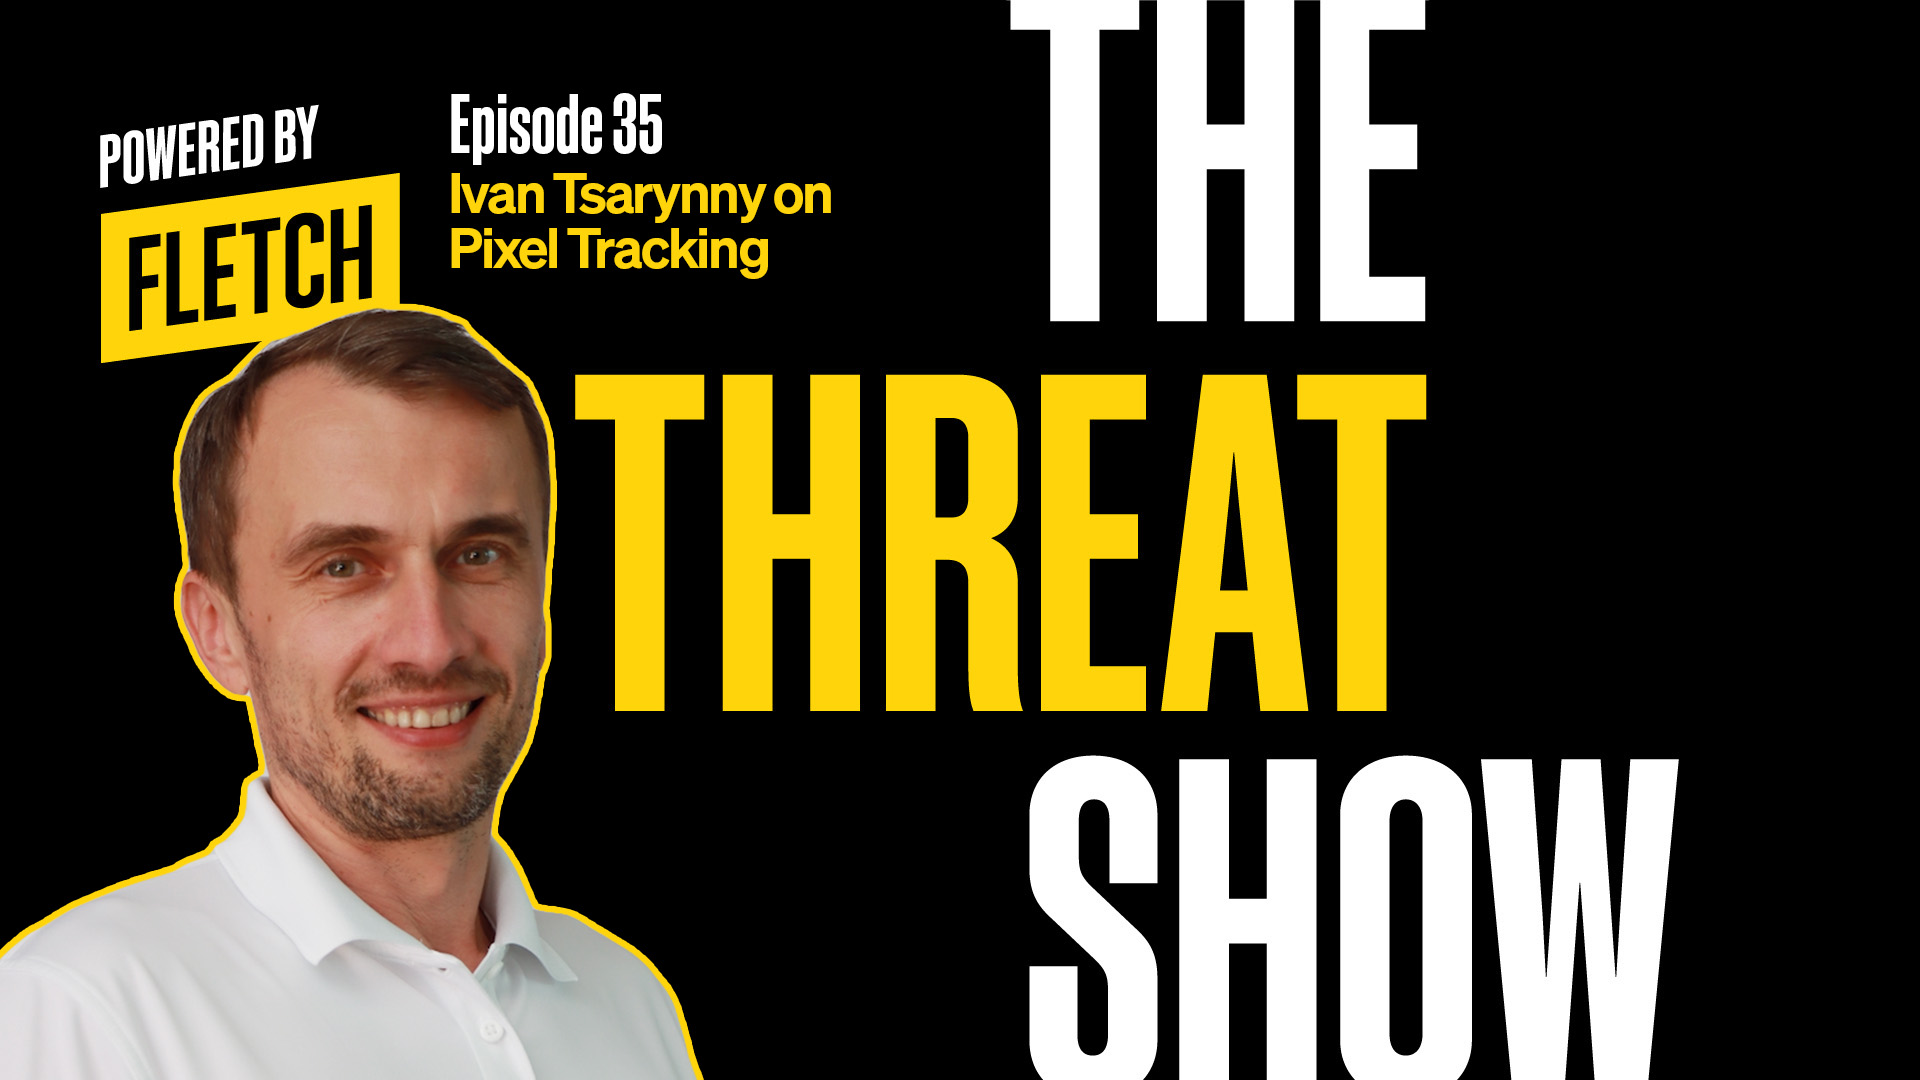 The Threat Show Ep. 35 w/ Ivan Tsarynny